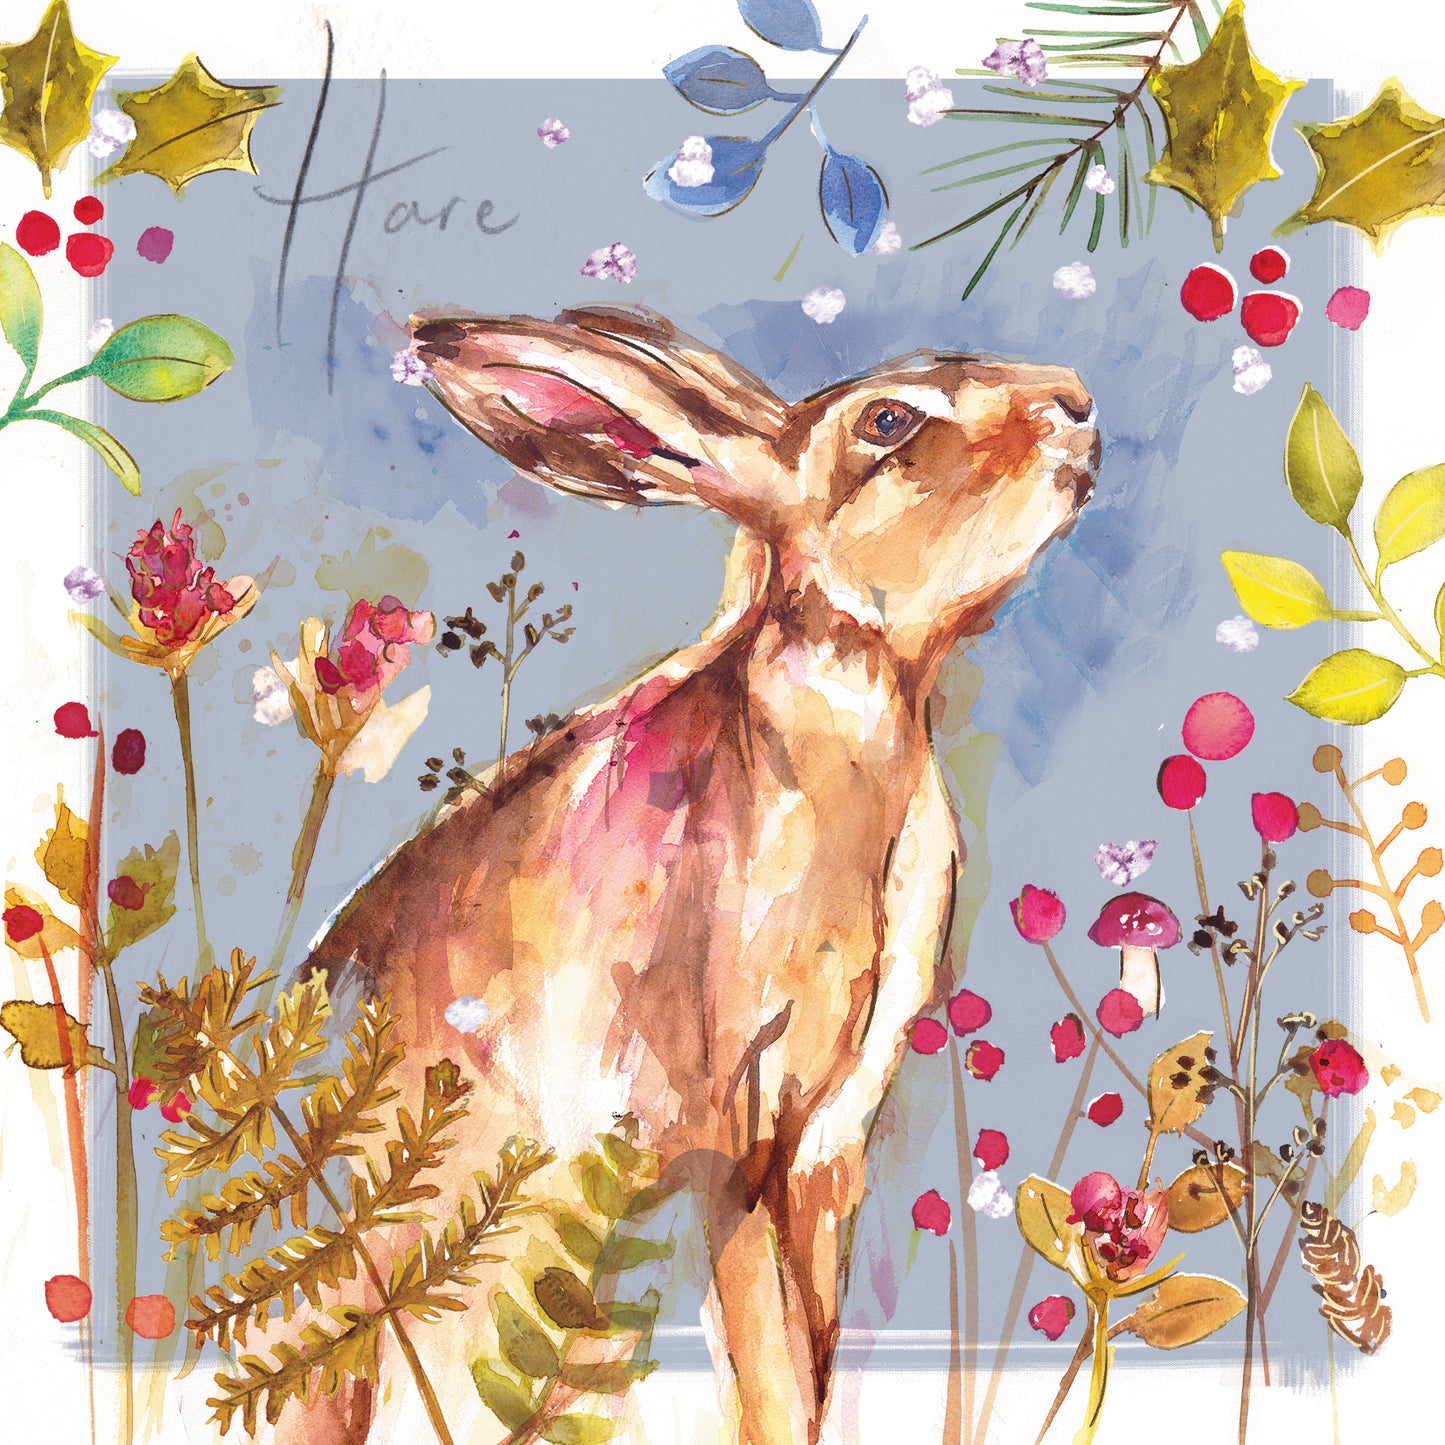 Box of 15 Almanac Winter Robin & Hare Christmas Cards In 3 Designs